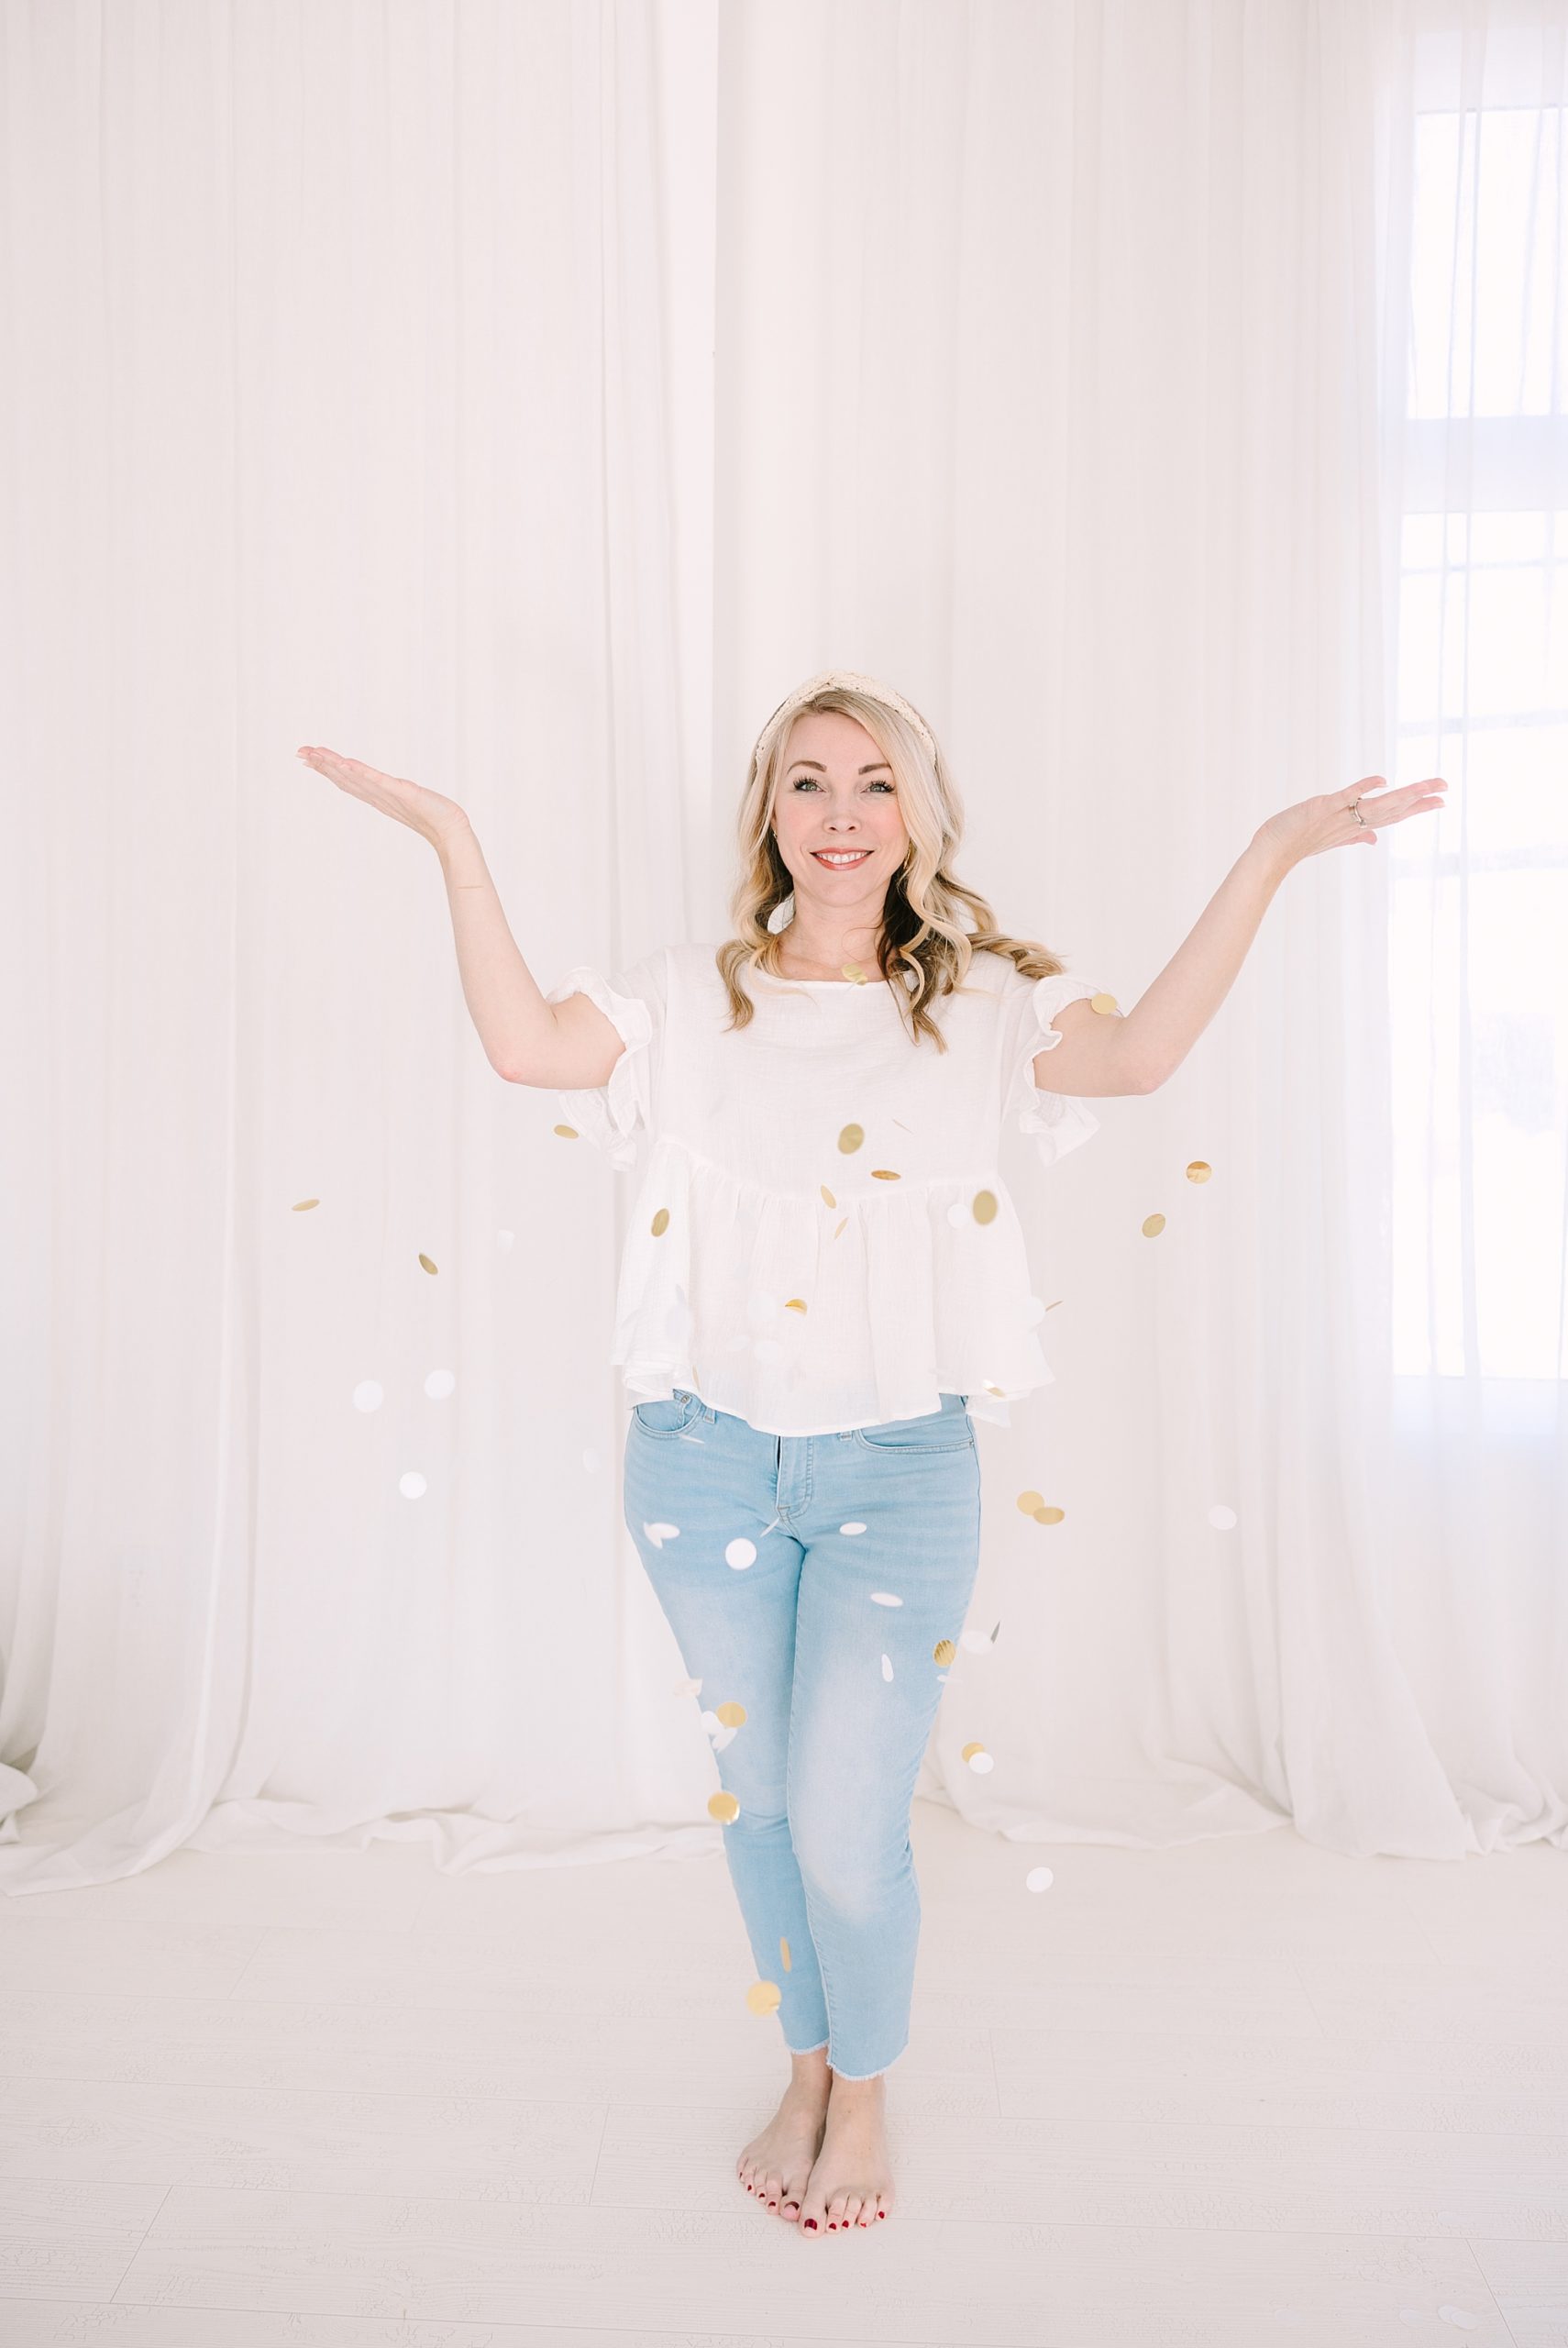 photographer tosses confetti during Studio Blanc branding photos in Nashville, TN